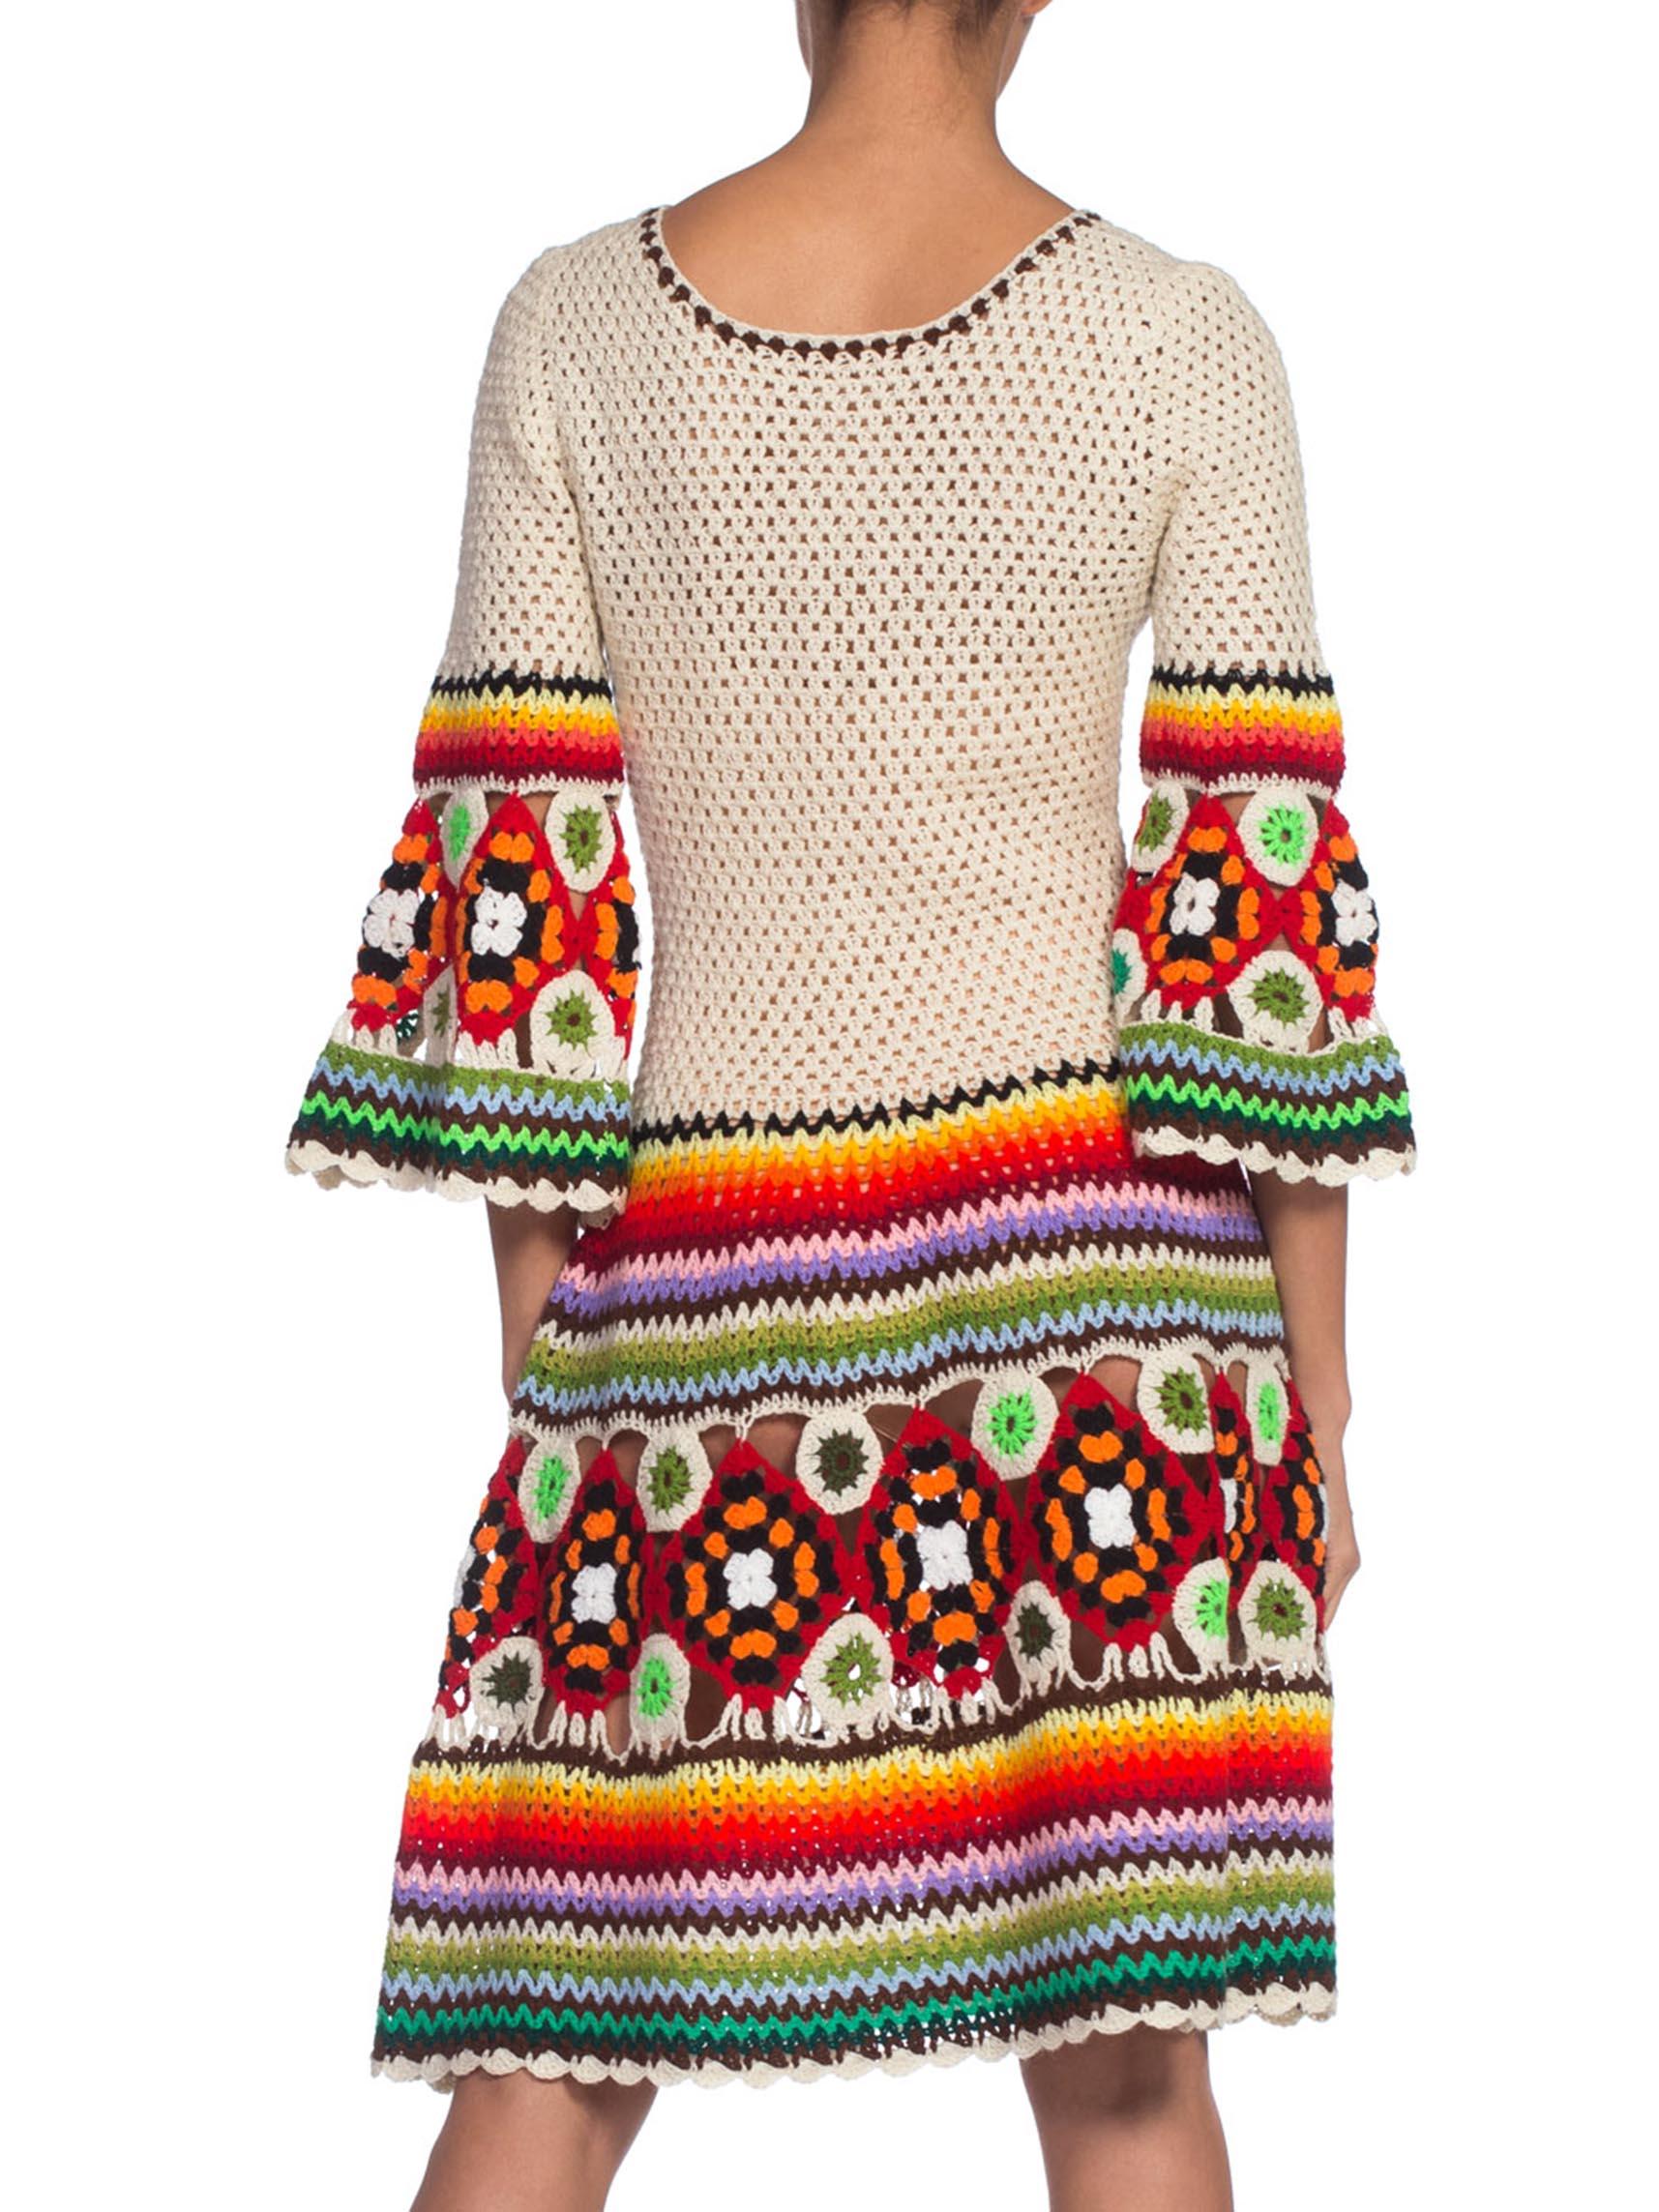 70s sweater dress